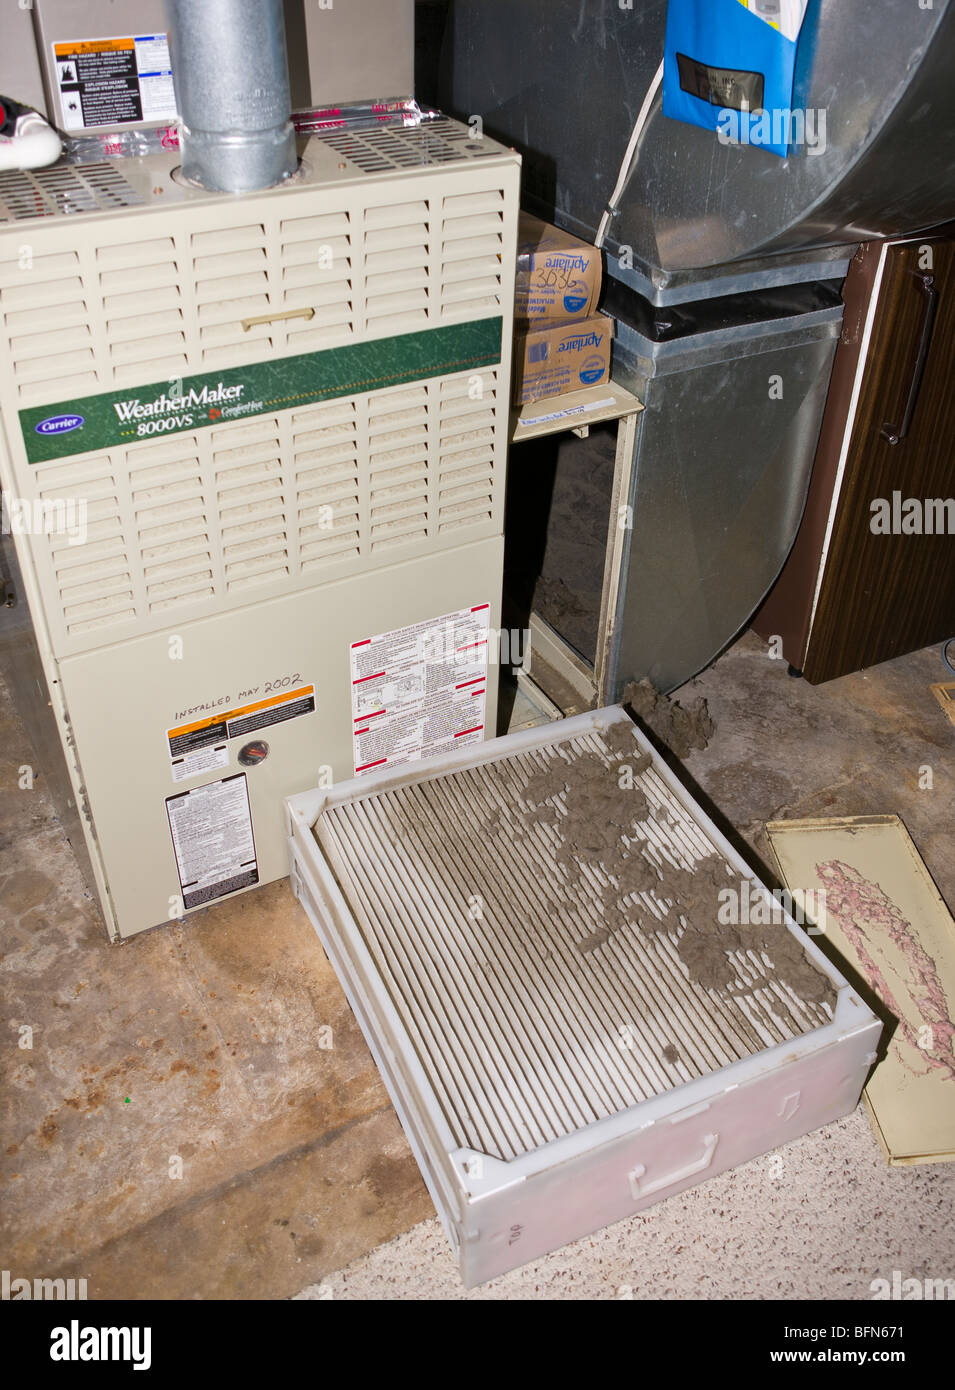 ARLINGTON, VIRGINIA, USA - Dirty air filter on home furnace. Stock Photo